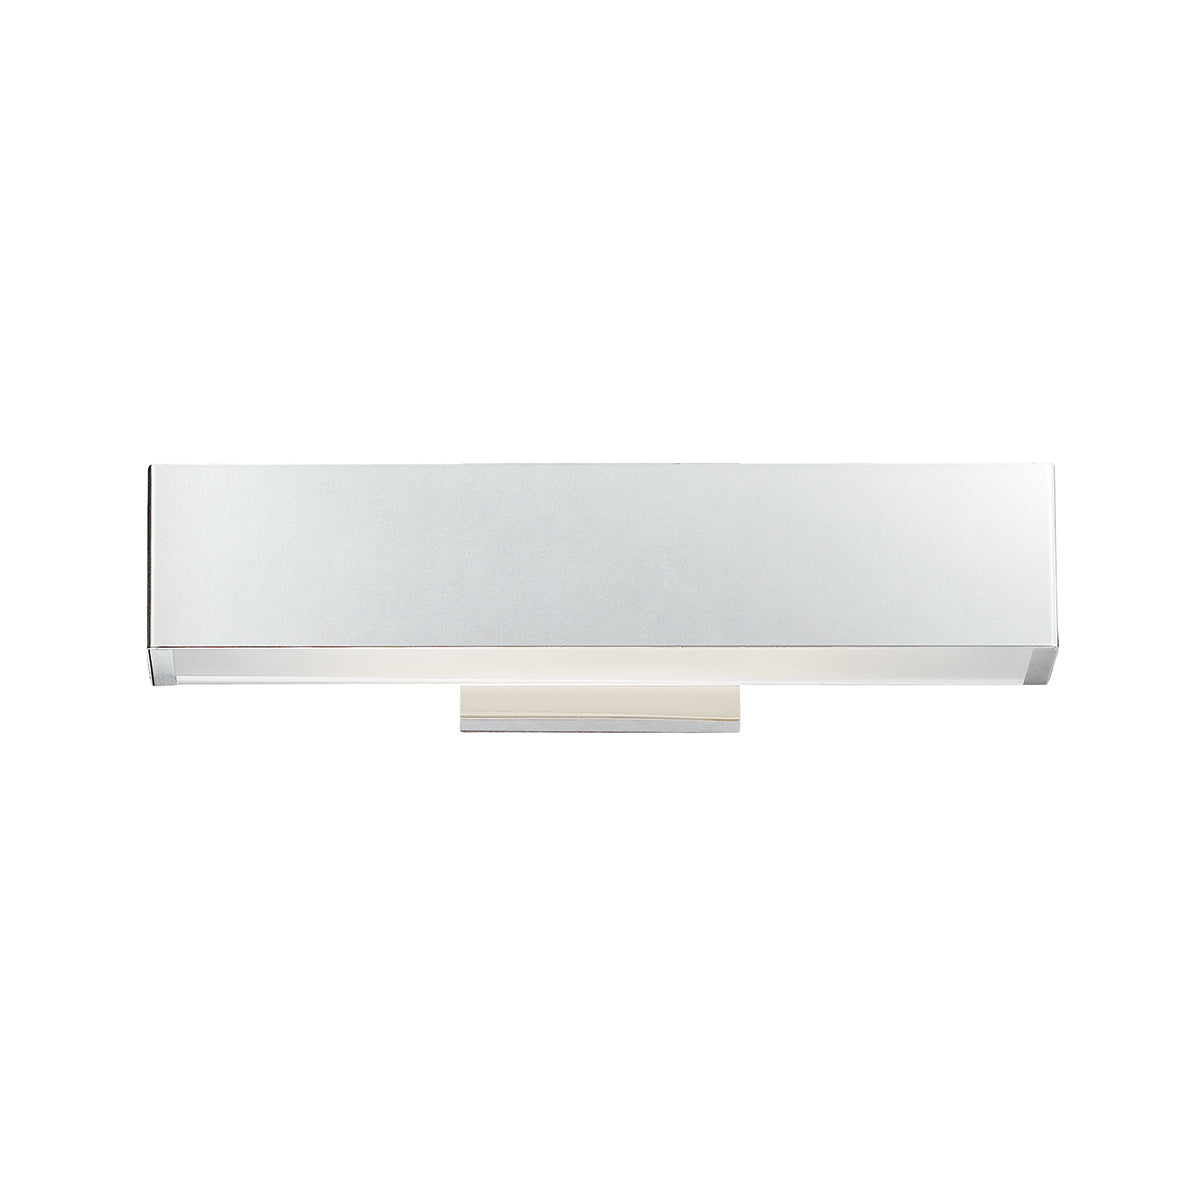 ANELLO Bathroom sconce Chrome - 32121-018 INTEGRATED LED | EUROFASE